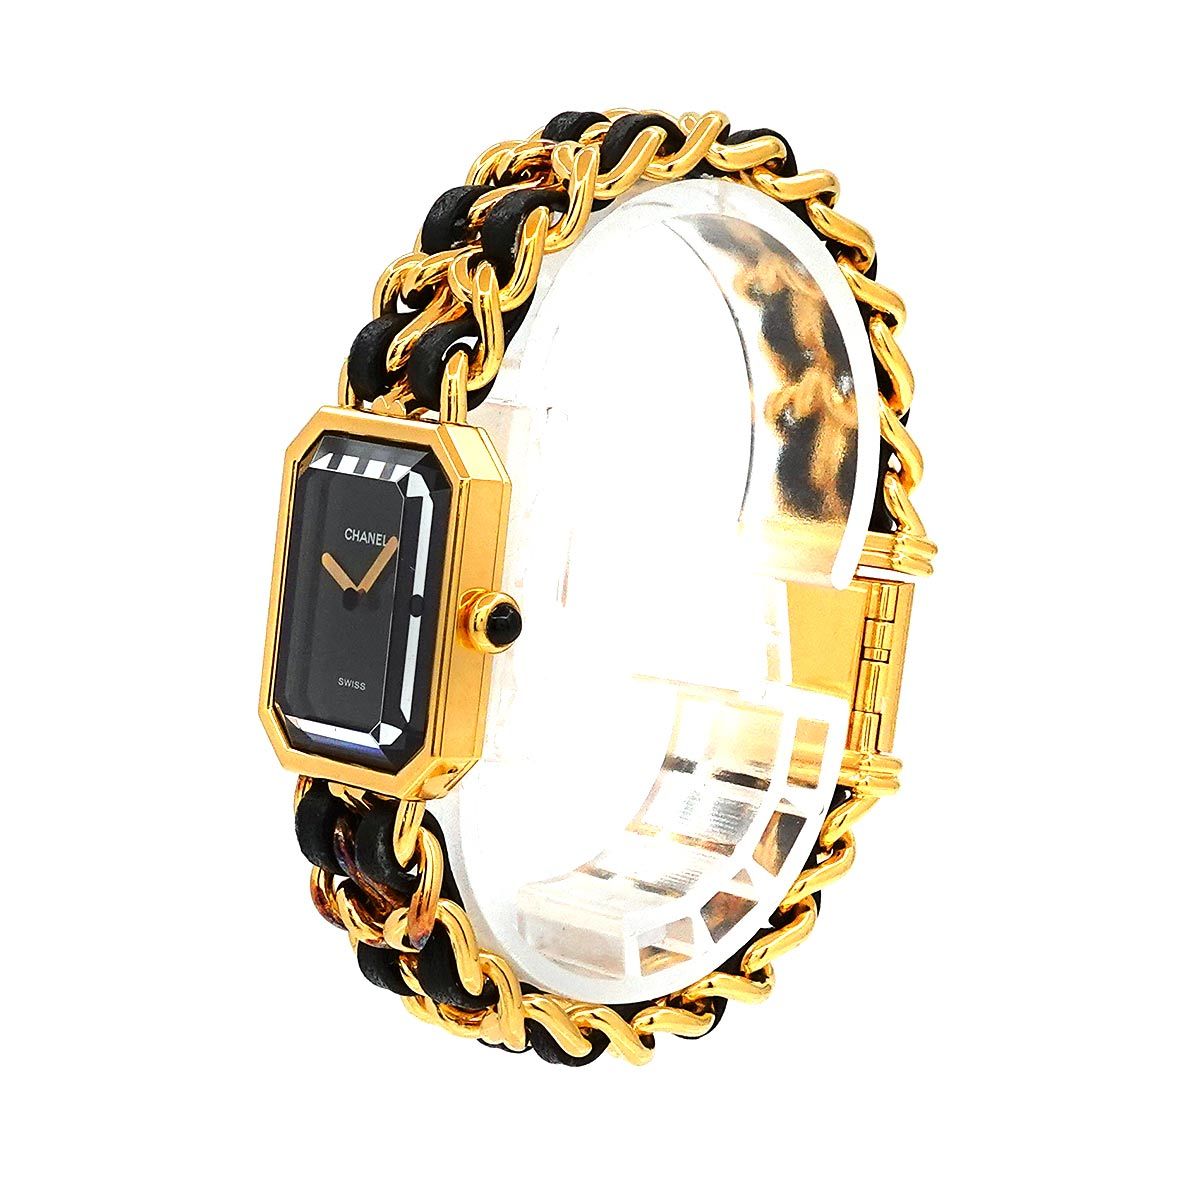  Chanel CHANEL Premiere L size H0001 Vintage lady's wristwatch black face Gold watch Premiere 90220449